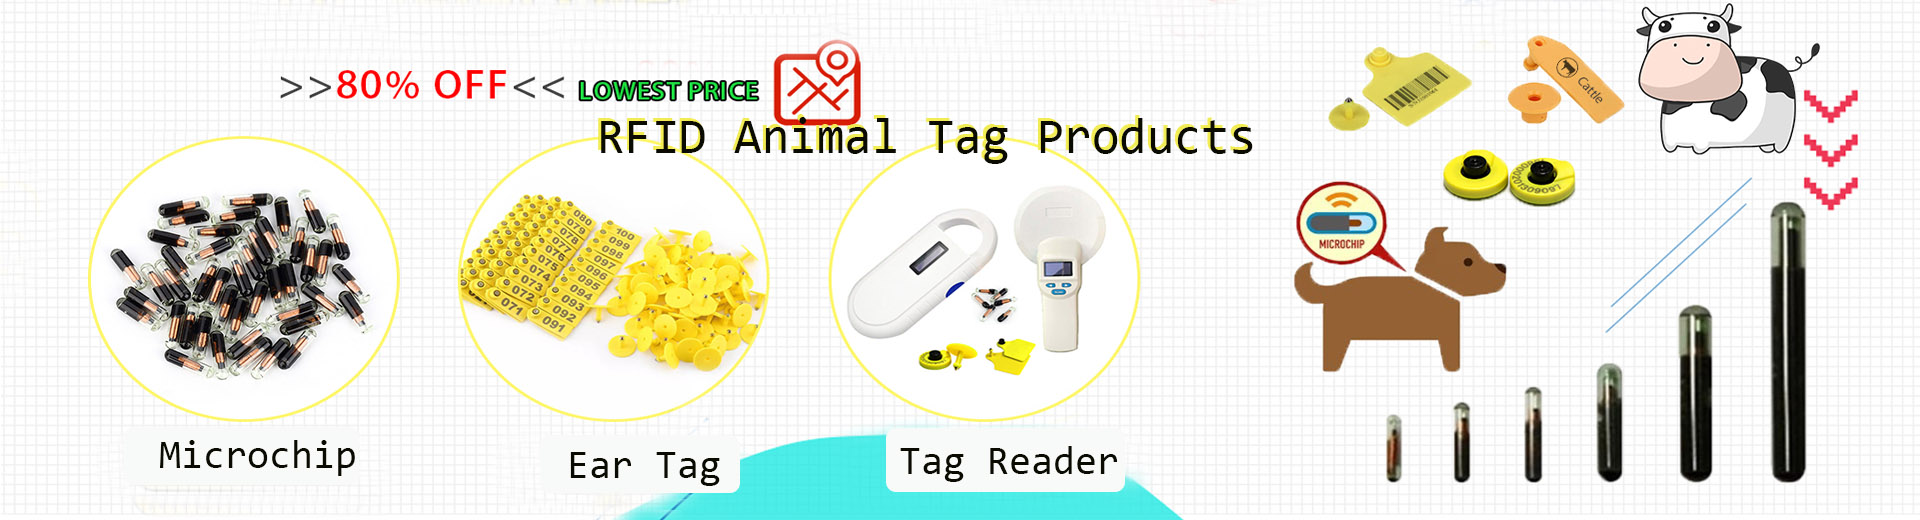 RFID Animal Tags For Pets